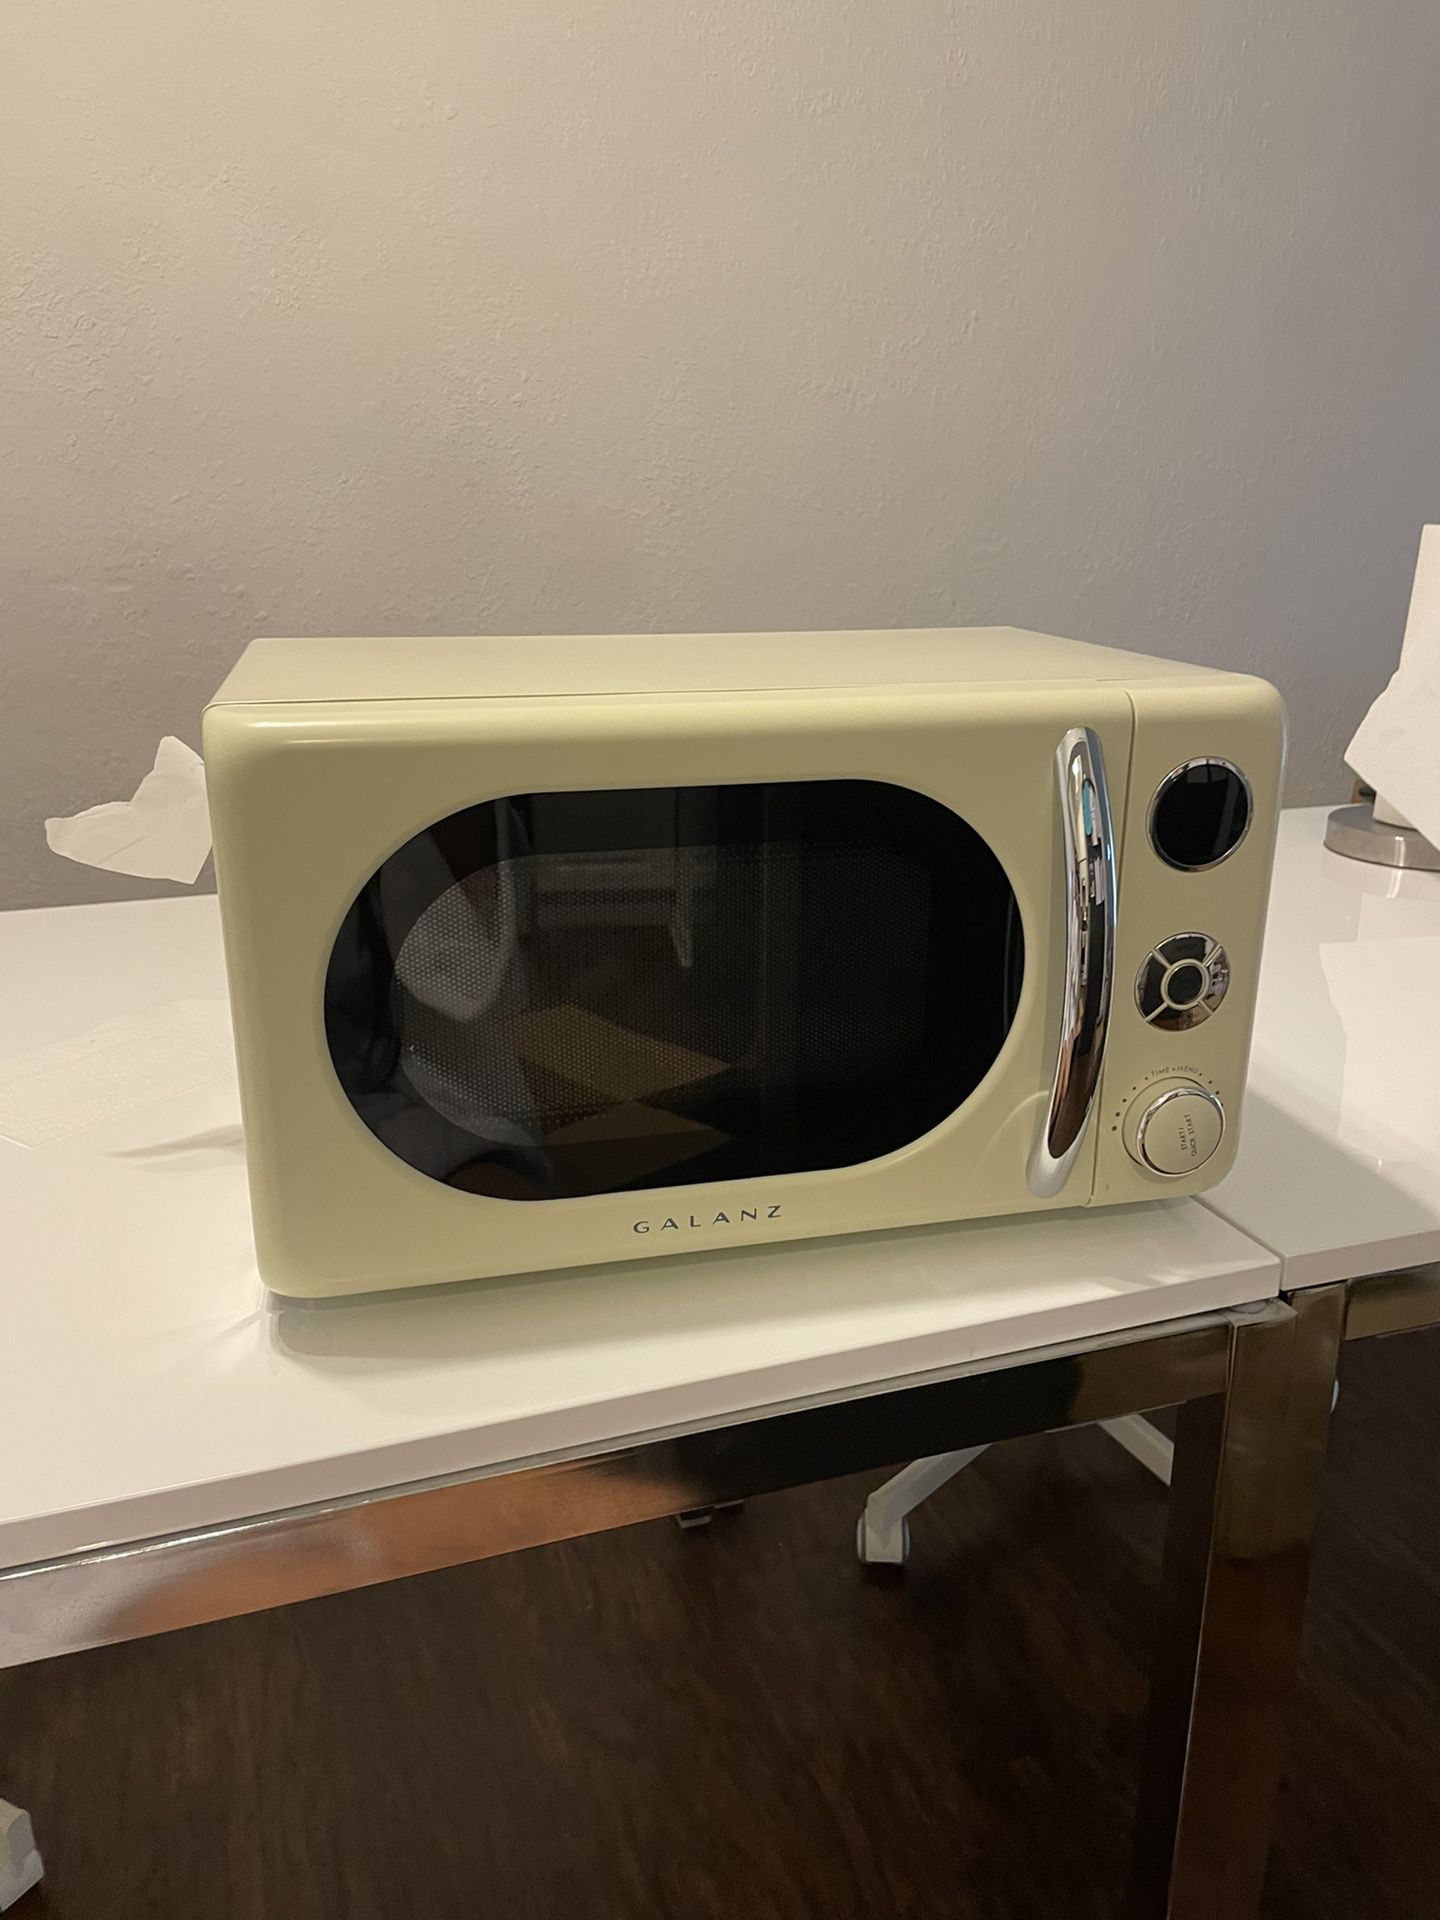 Galanz 0.7 Cu ft Retro Countertop Microwave Oven, 700 Watts, Cream